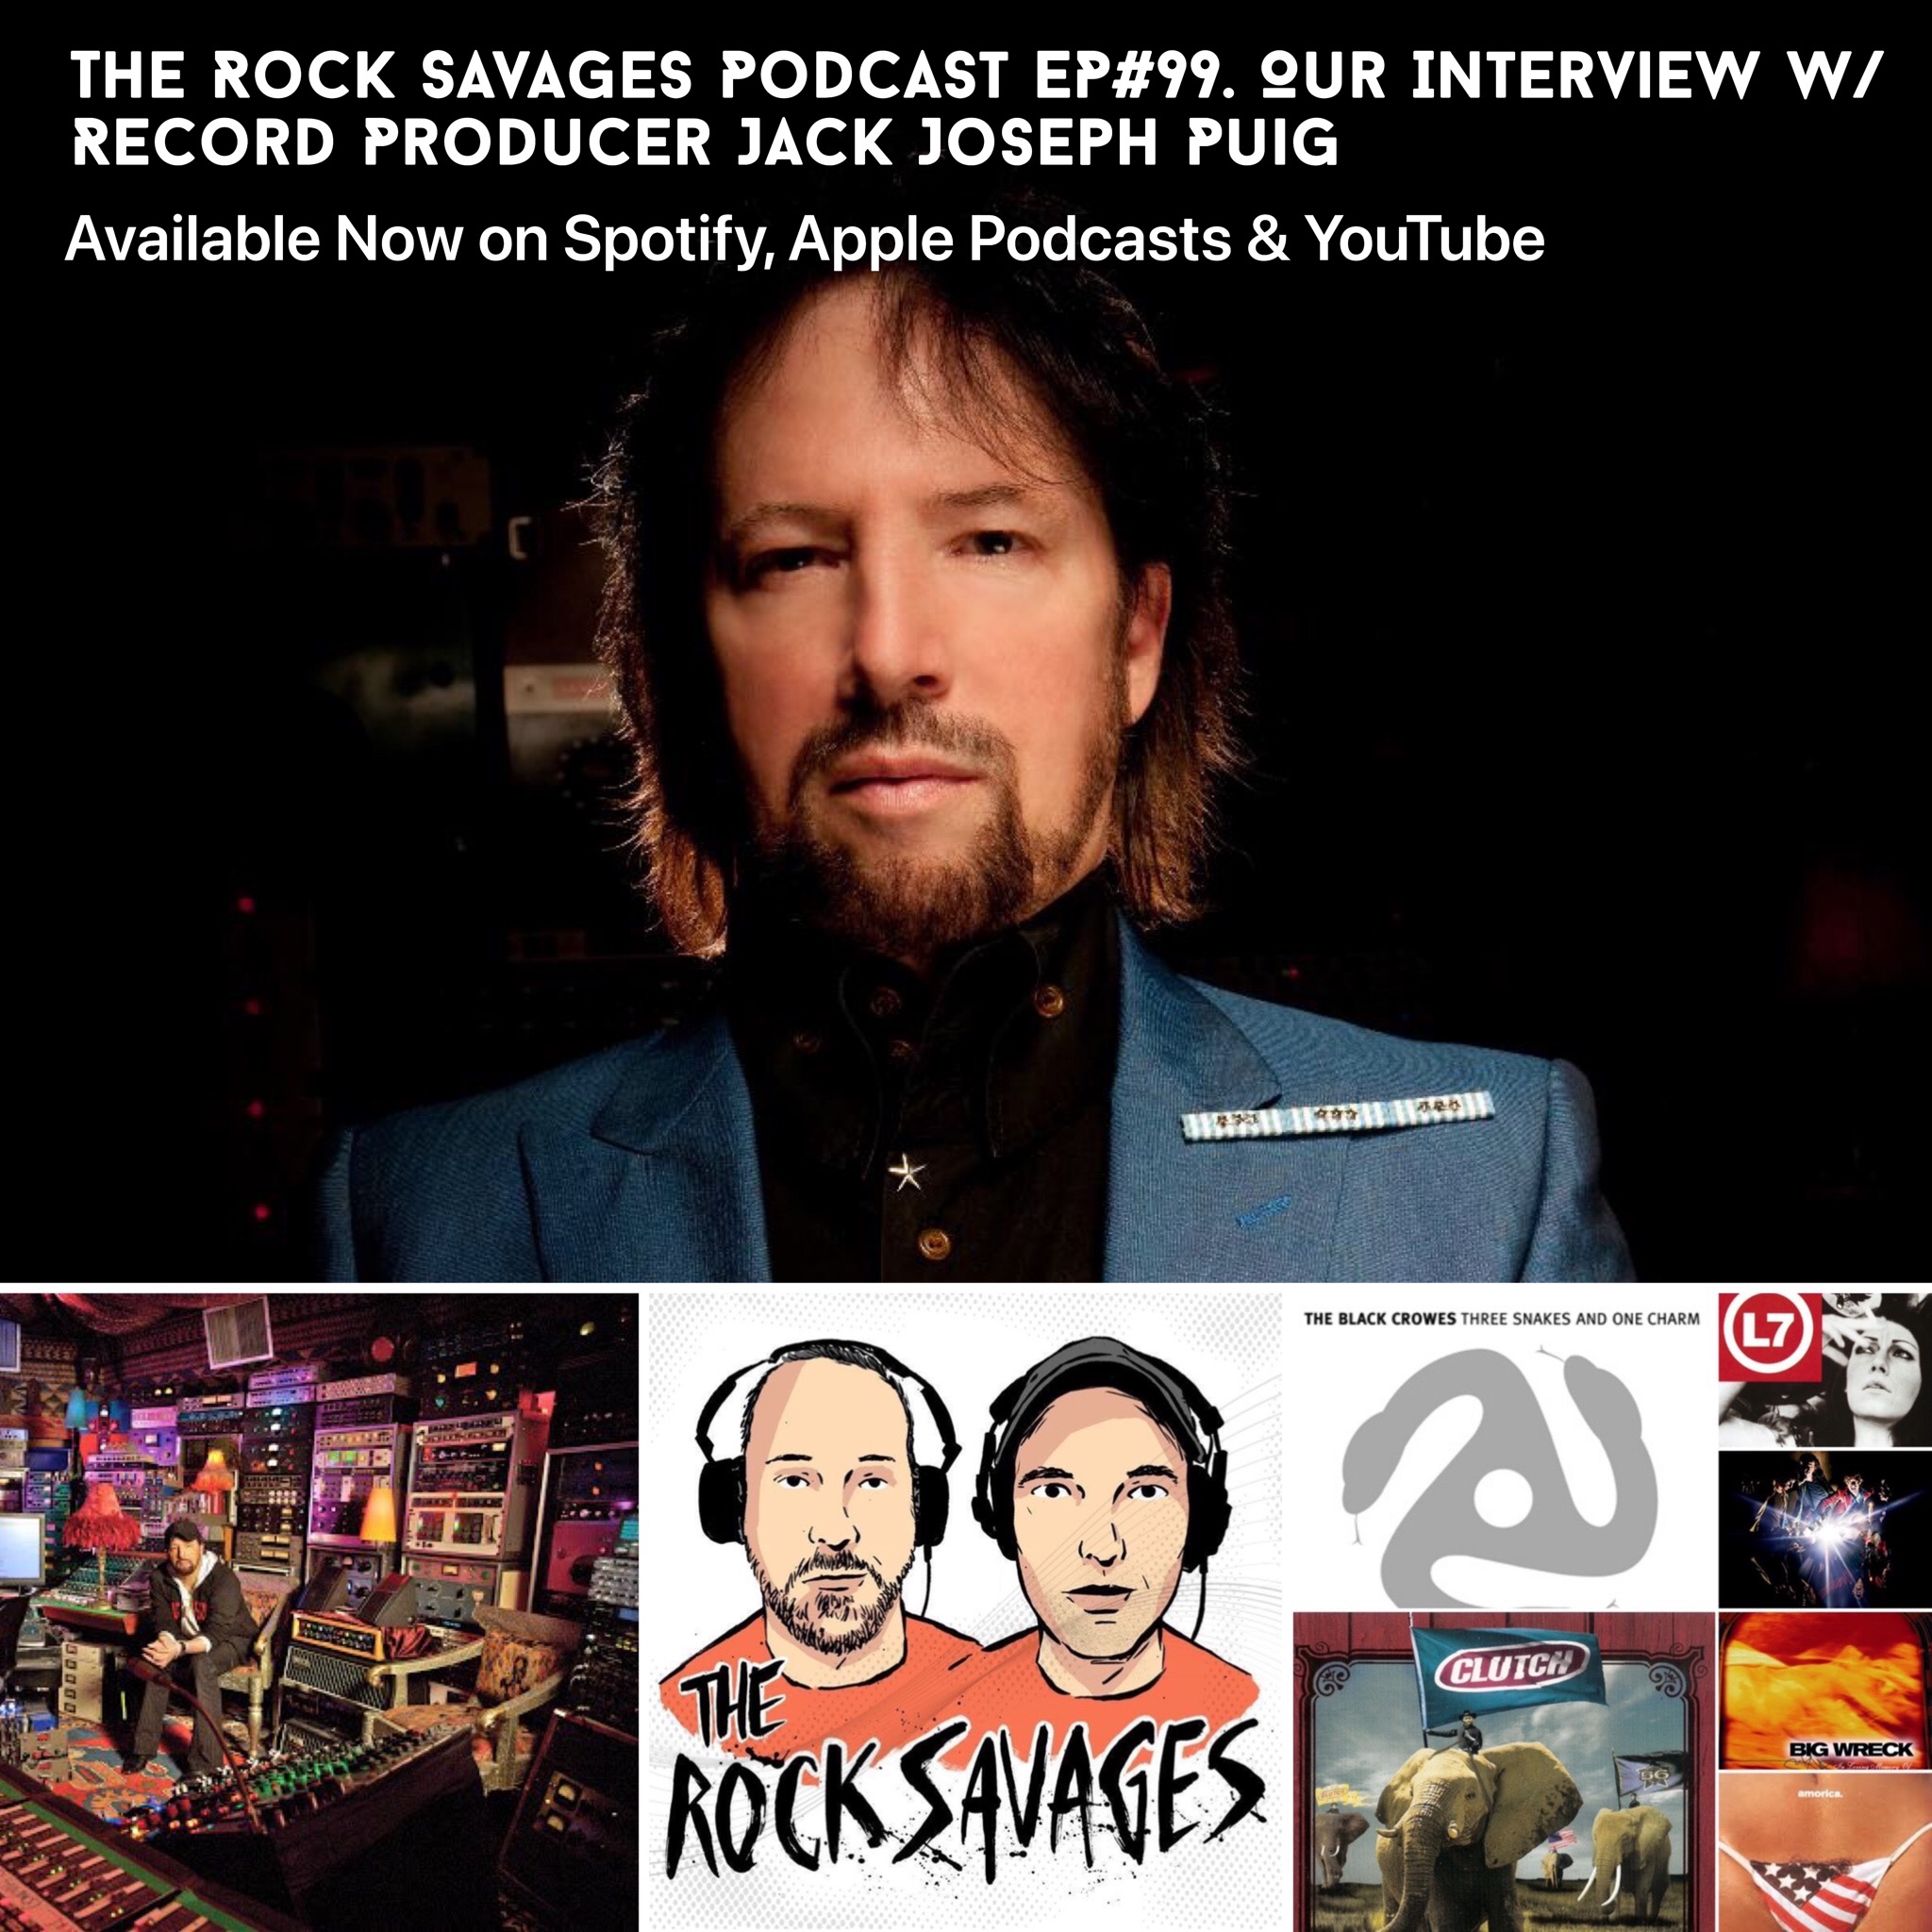 The Rock Savages Talk to Legendary Record Producer Jack Joseph Puig